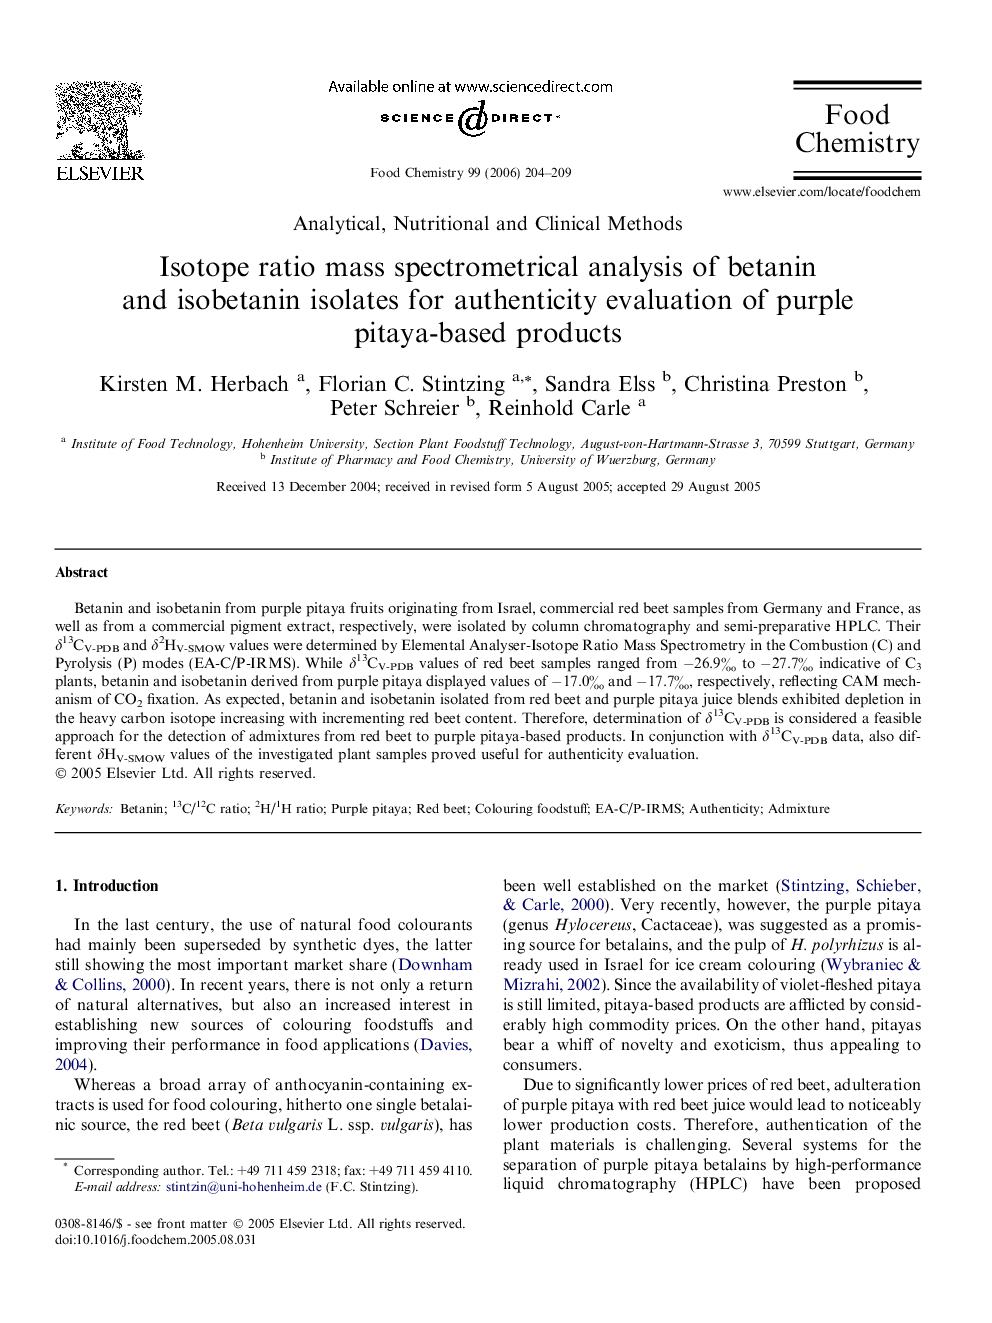 Isotope ratio mass spectrometrical analysis of betanin and isobetanin isolates for authenticity evaluation of purple pitaya-based products